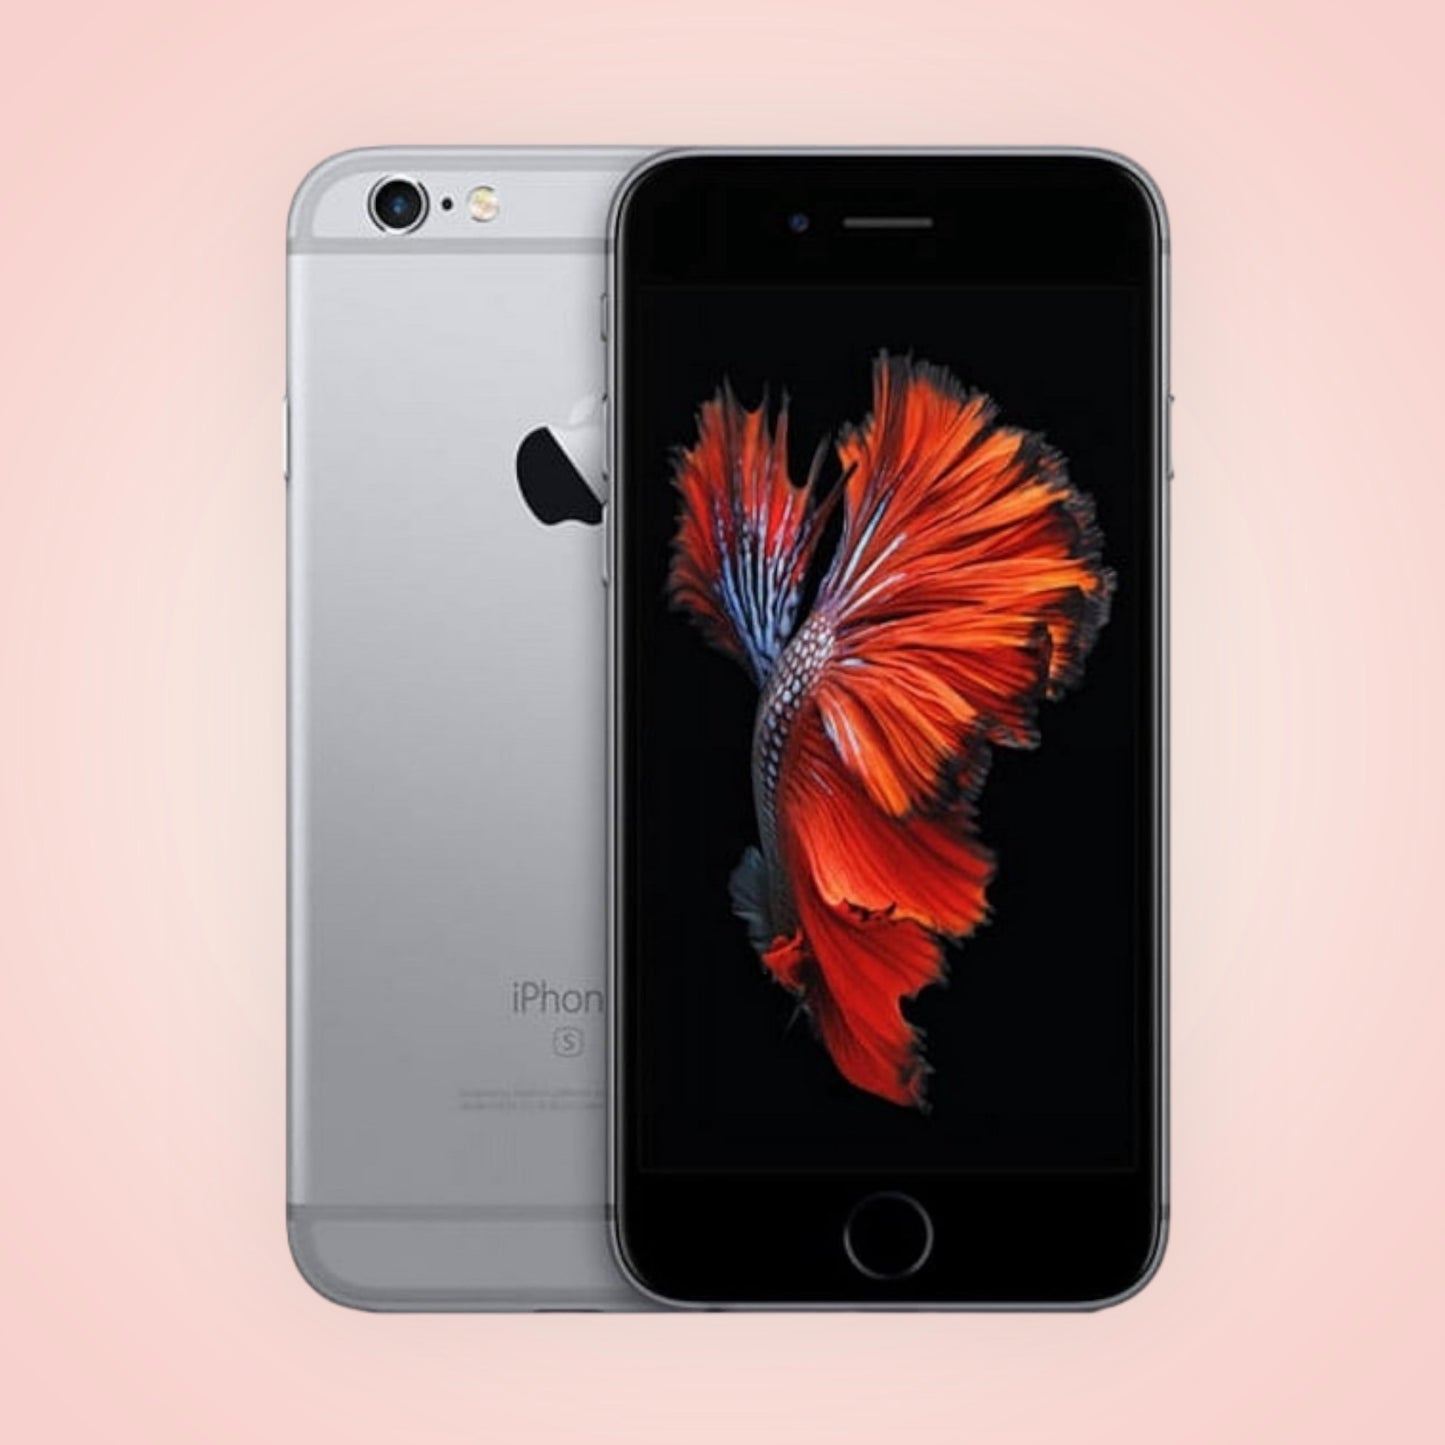 iPhone 6S - Space Gray - 32GB - CDMA GSM Unlocked